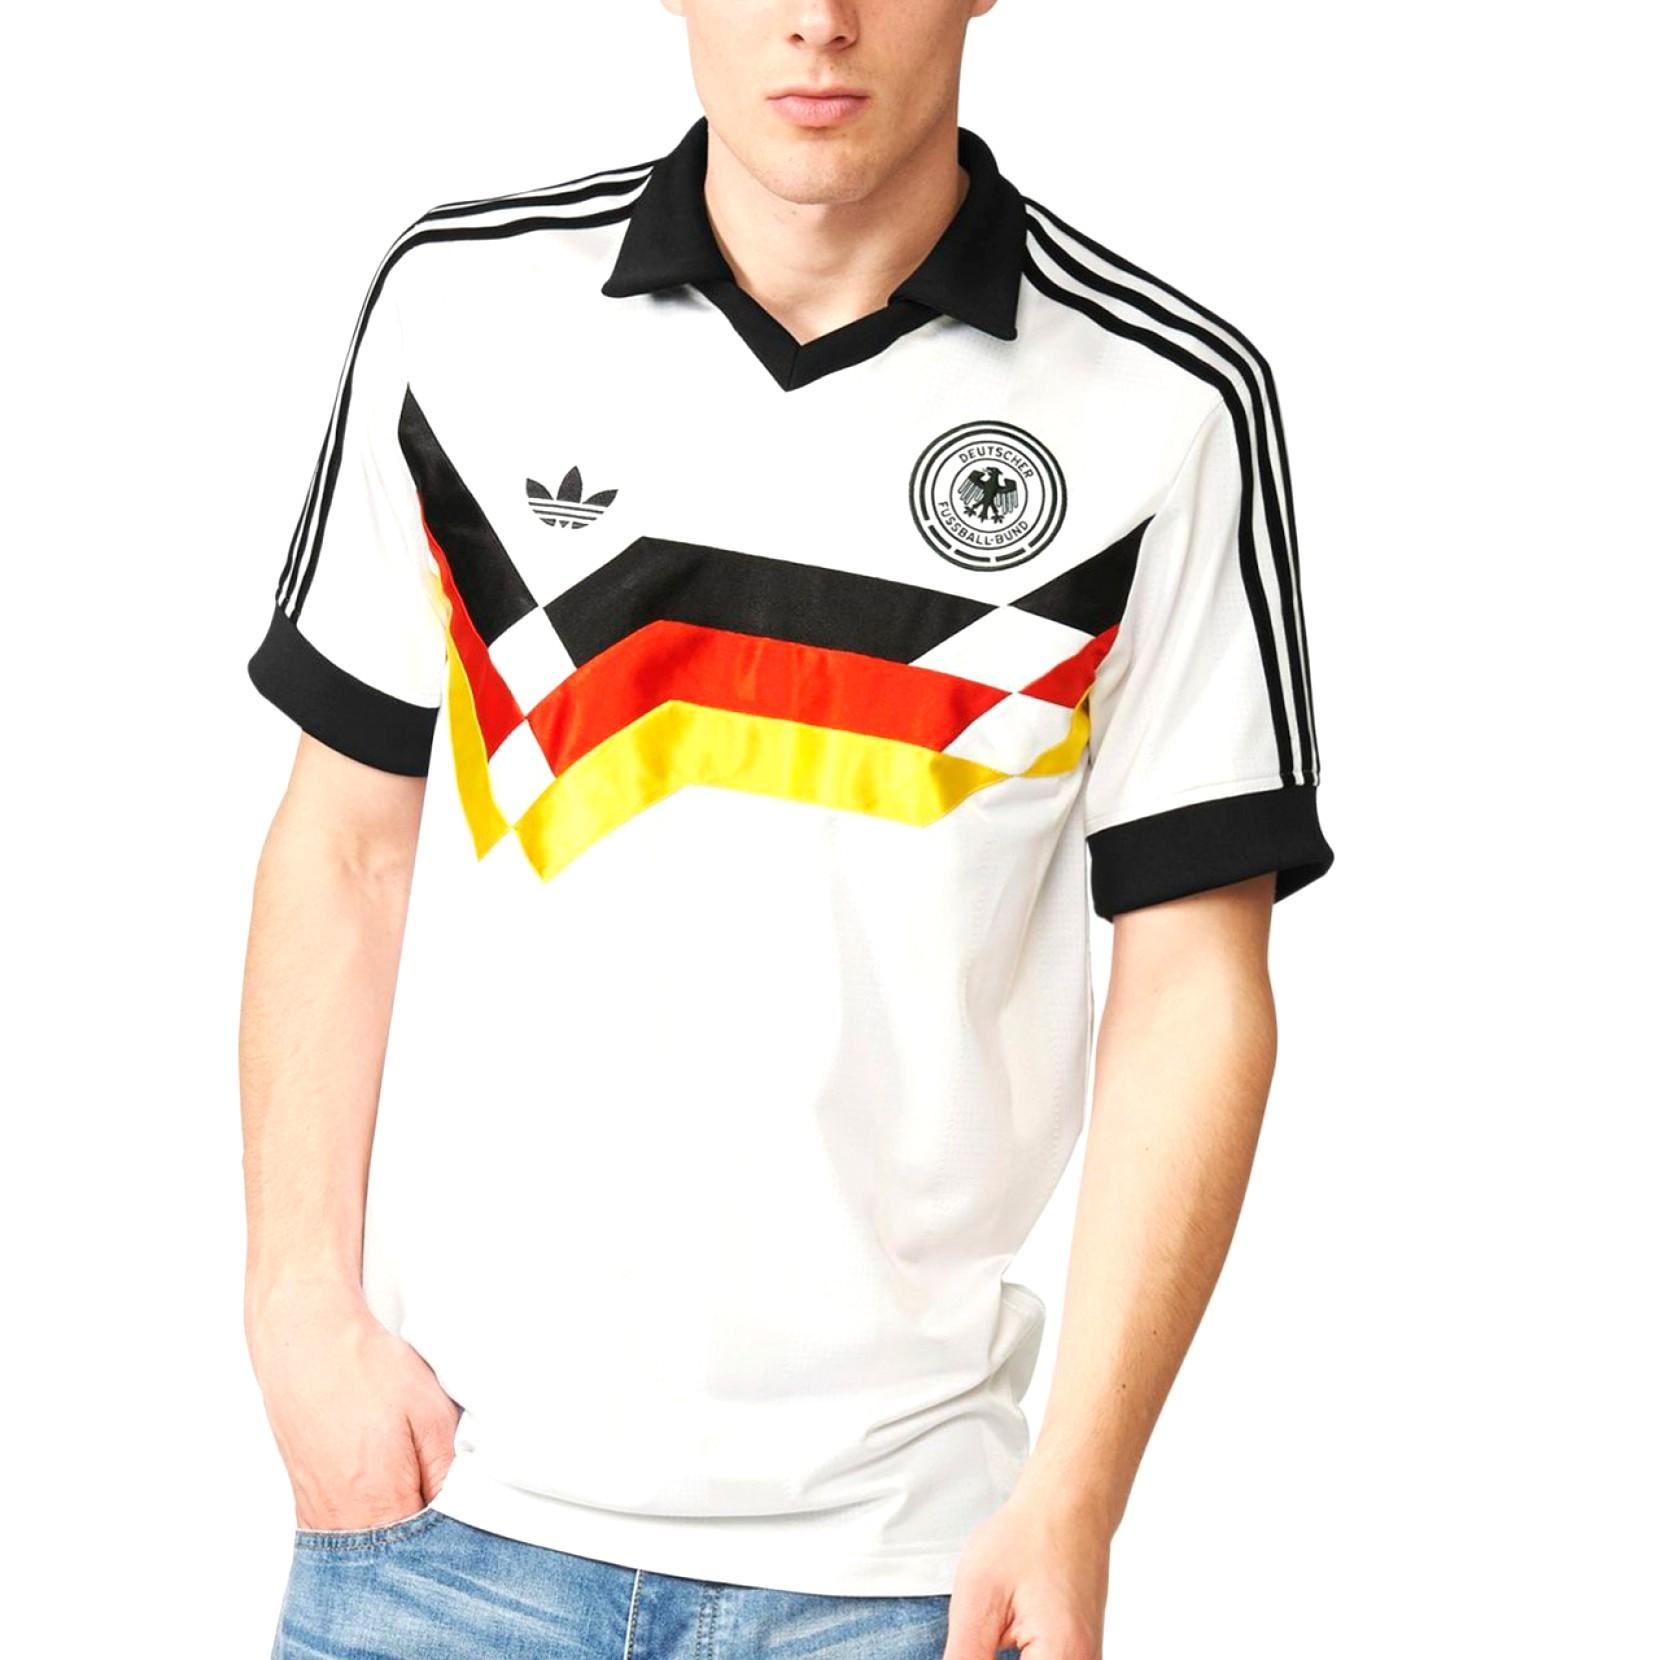 Адидас сборная германии. Адидас сборная Германии 1990. Adidas Germany Polo. Джерси ретро адидас. Adidas Shirt Germany Retro.